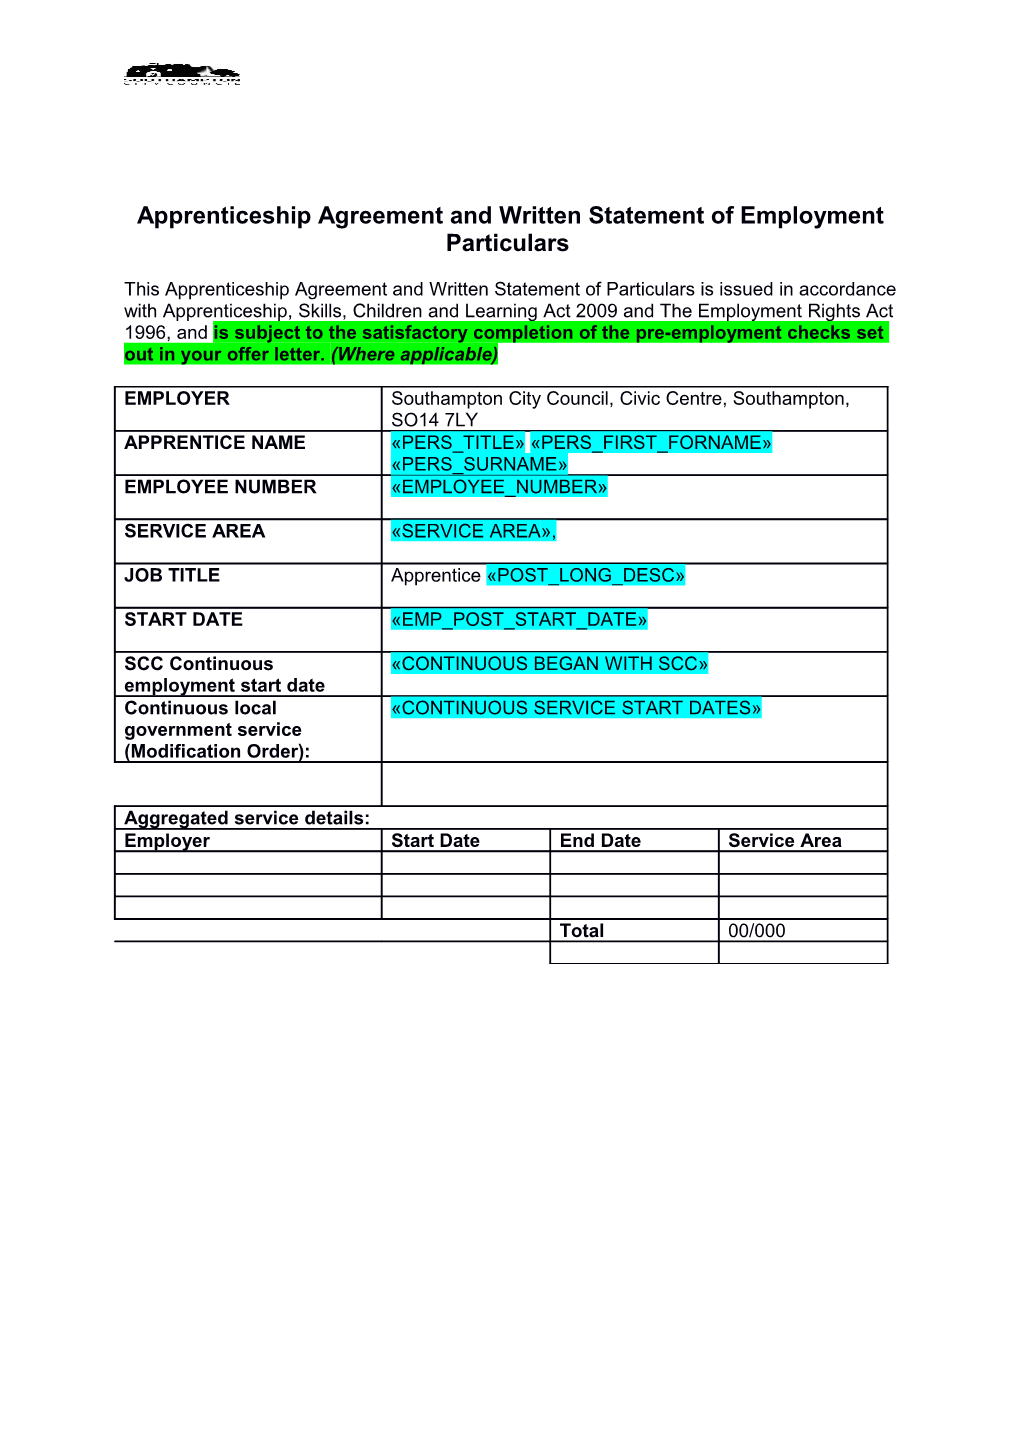 Apprenticeship Agreement and Written Statement of Employment Particulars